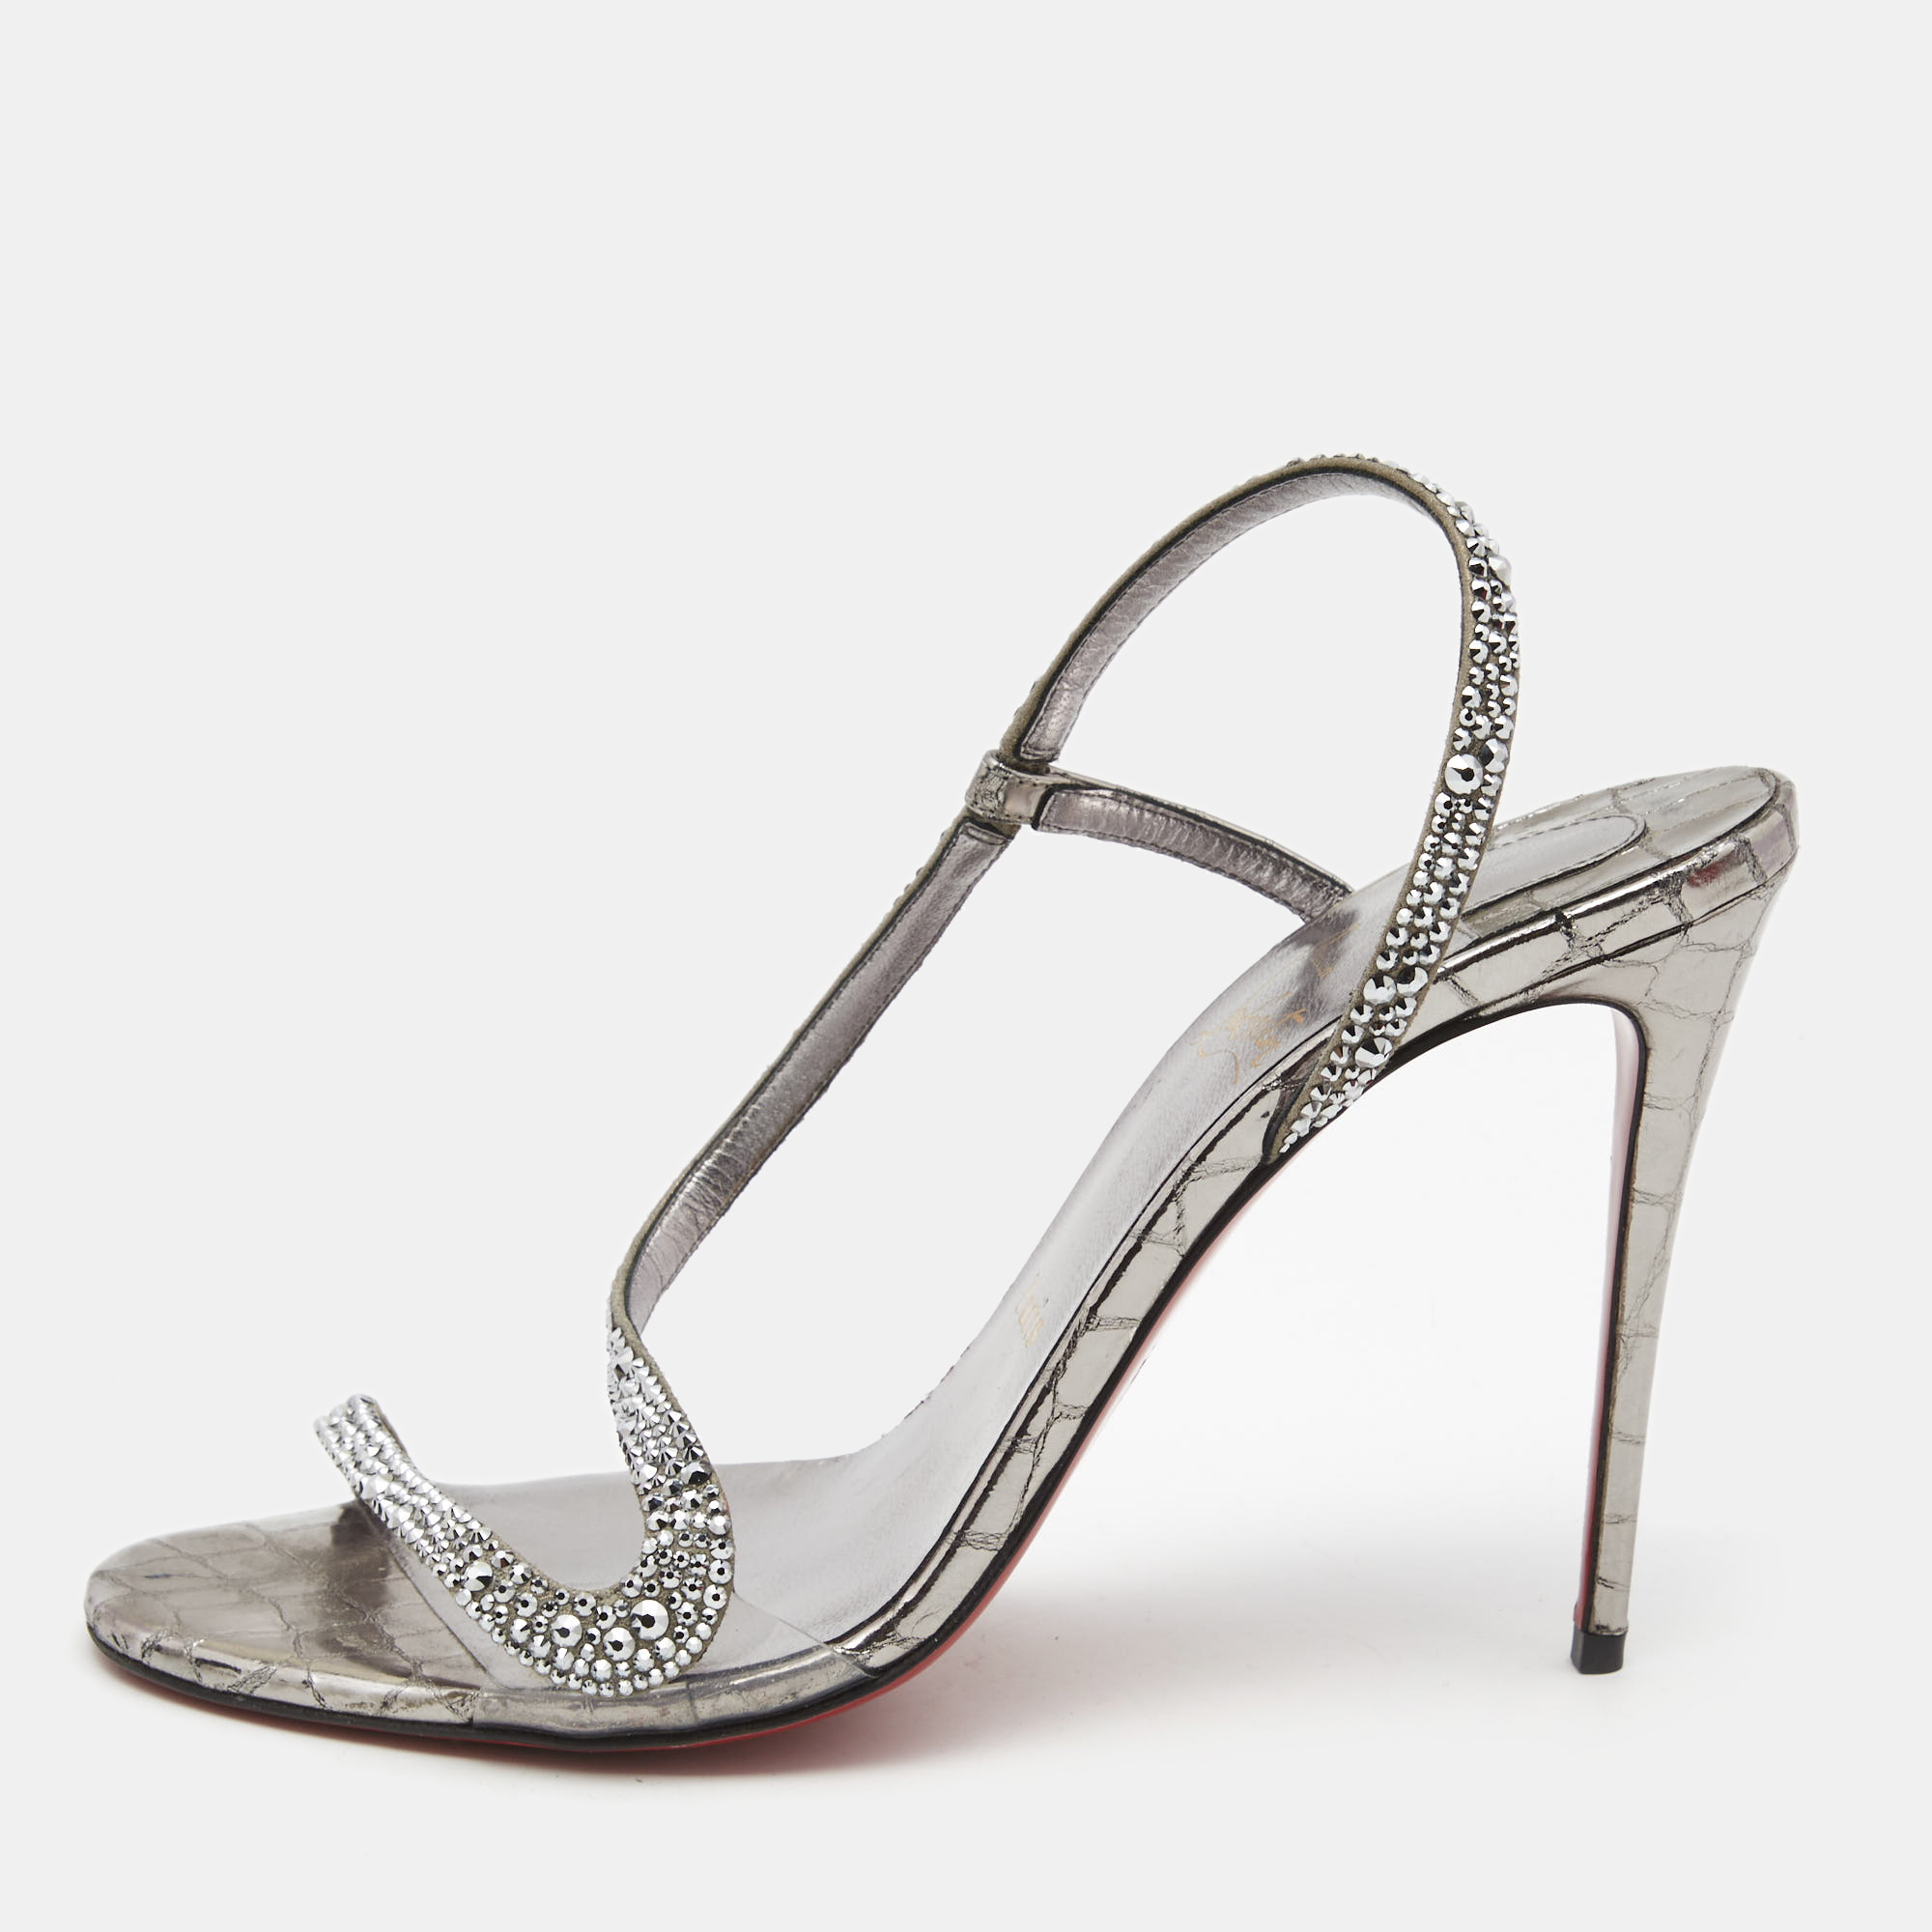 Christian louboutin metallic grey crystal embellished suede rosalie sandals size 39.5